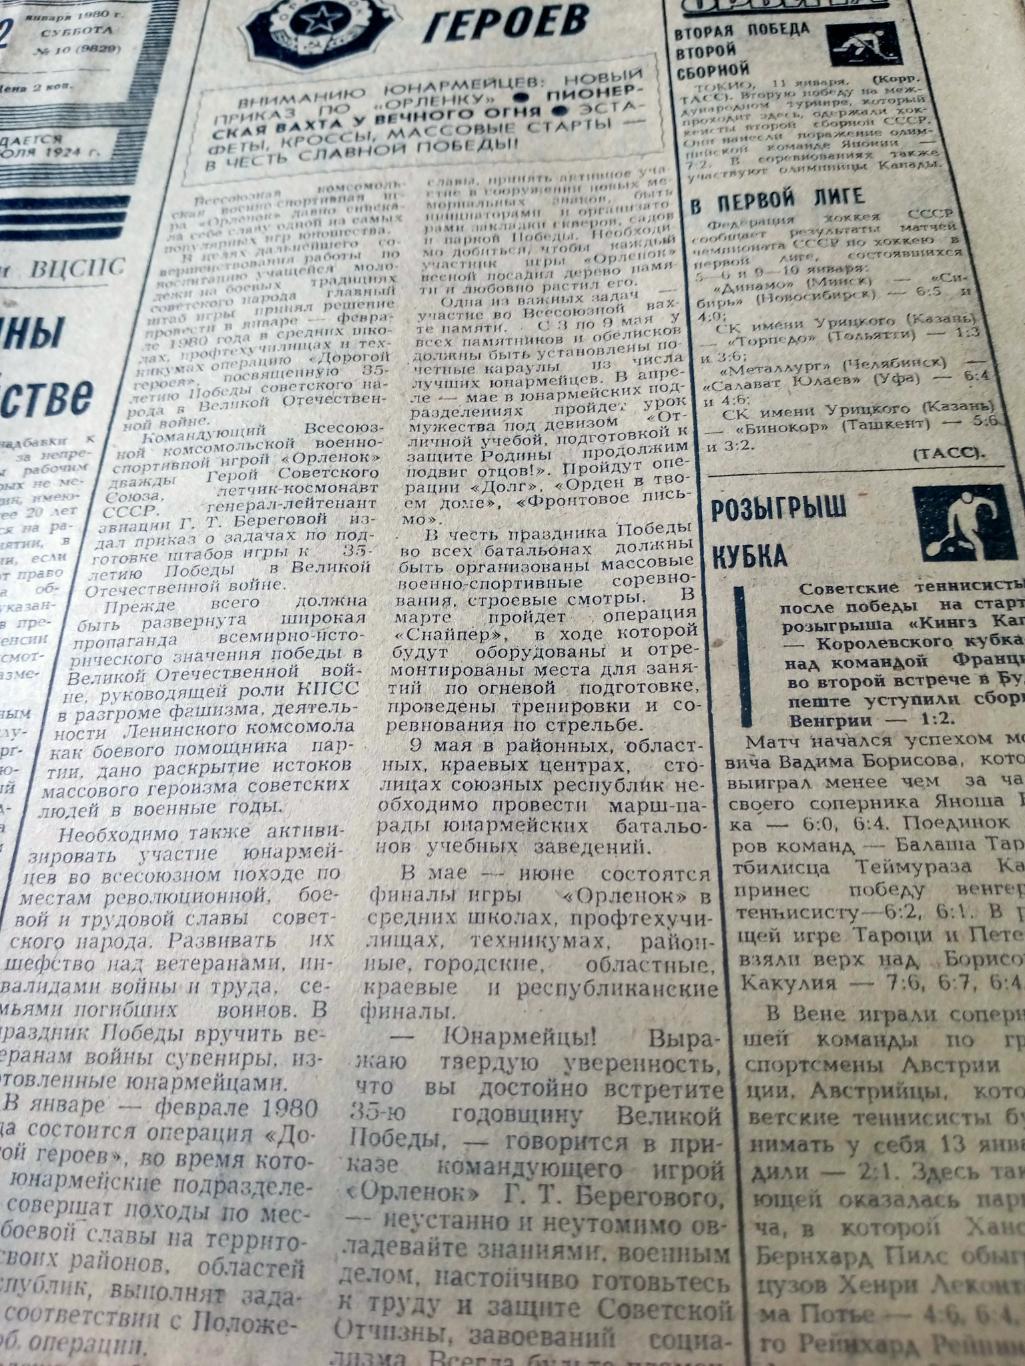 Олимпийский год.1980. Советский спорт. 12 января